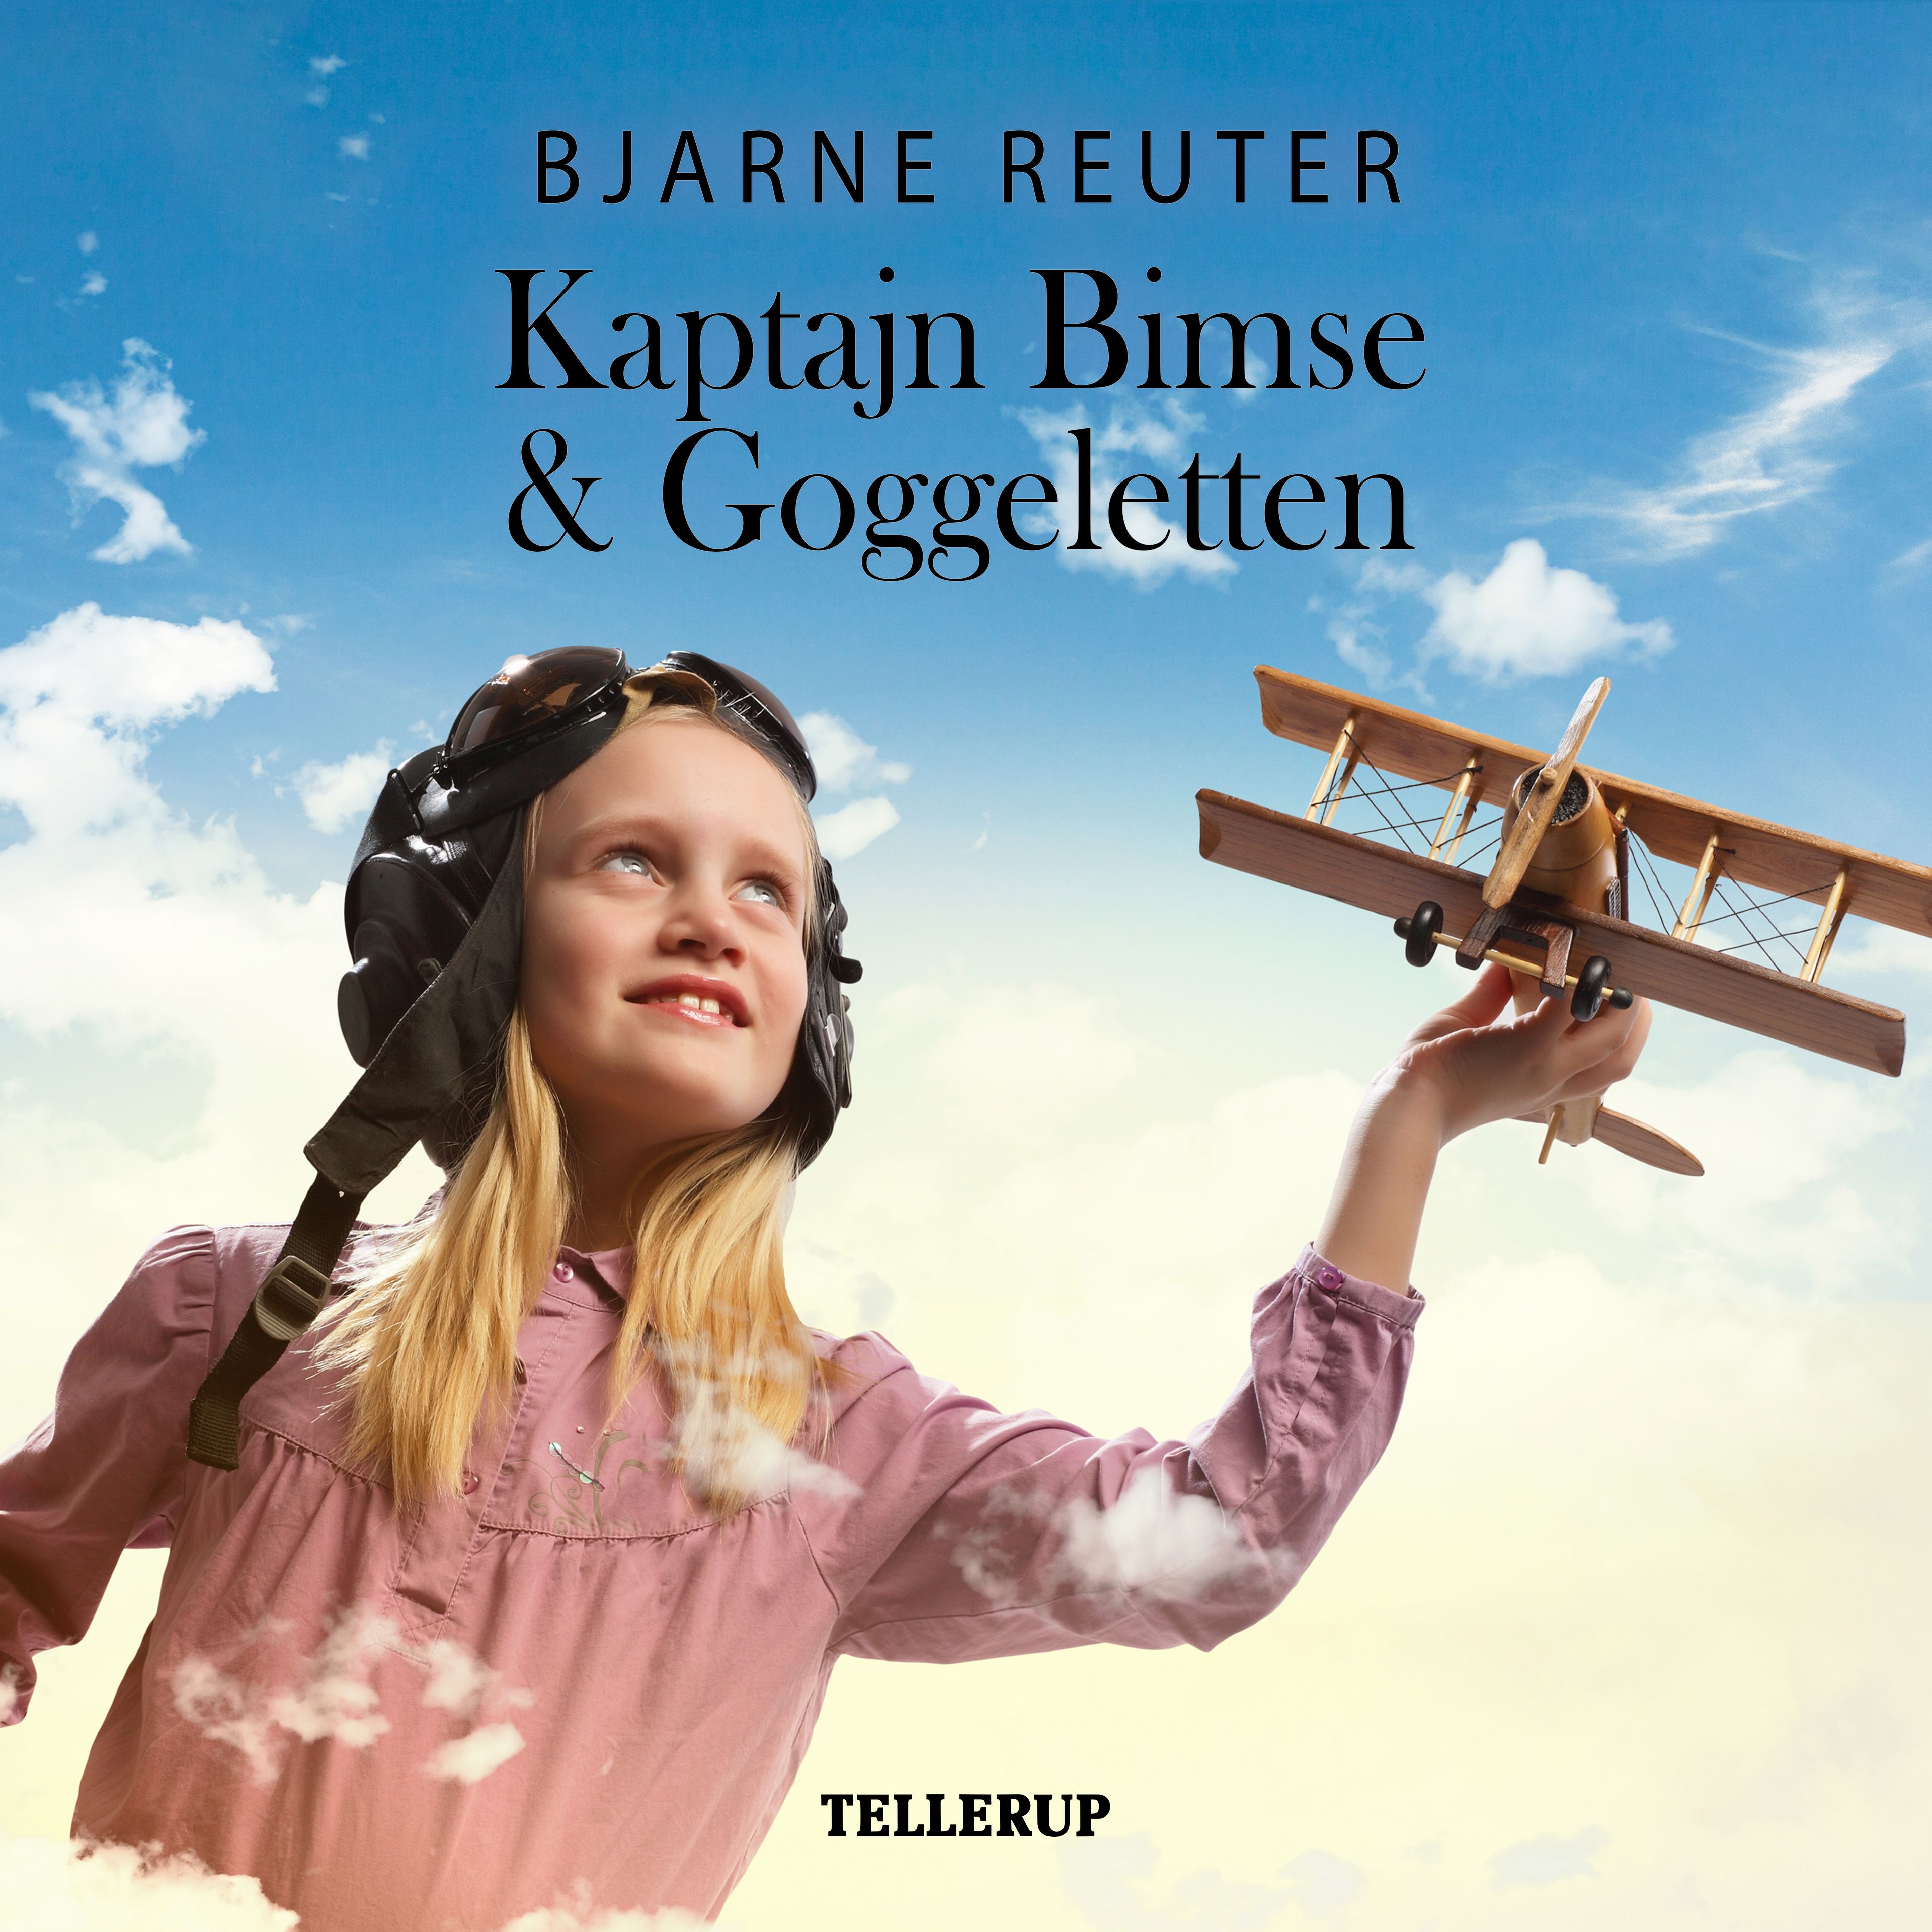 Kaptajn Bimse #1: Kaptajn Bimse & Goggeletten, ljudbok av Bjarne Reuter